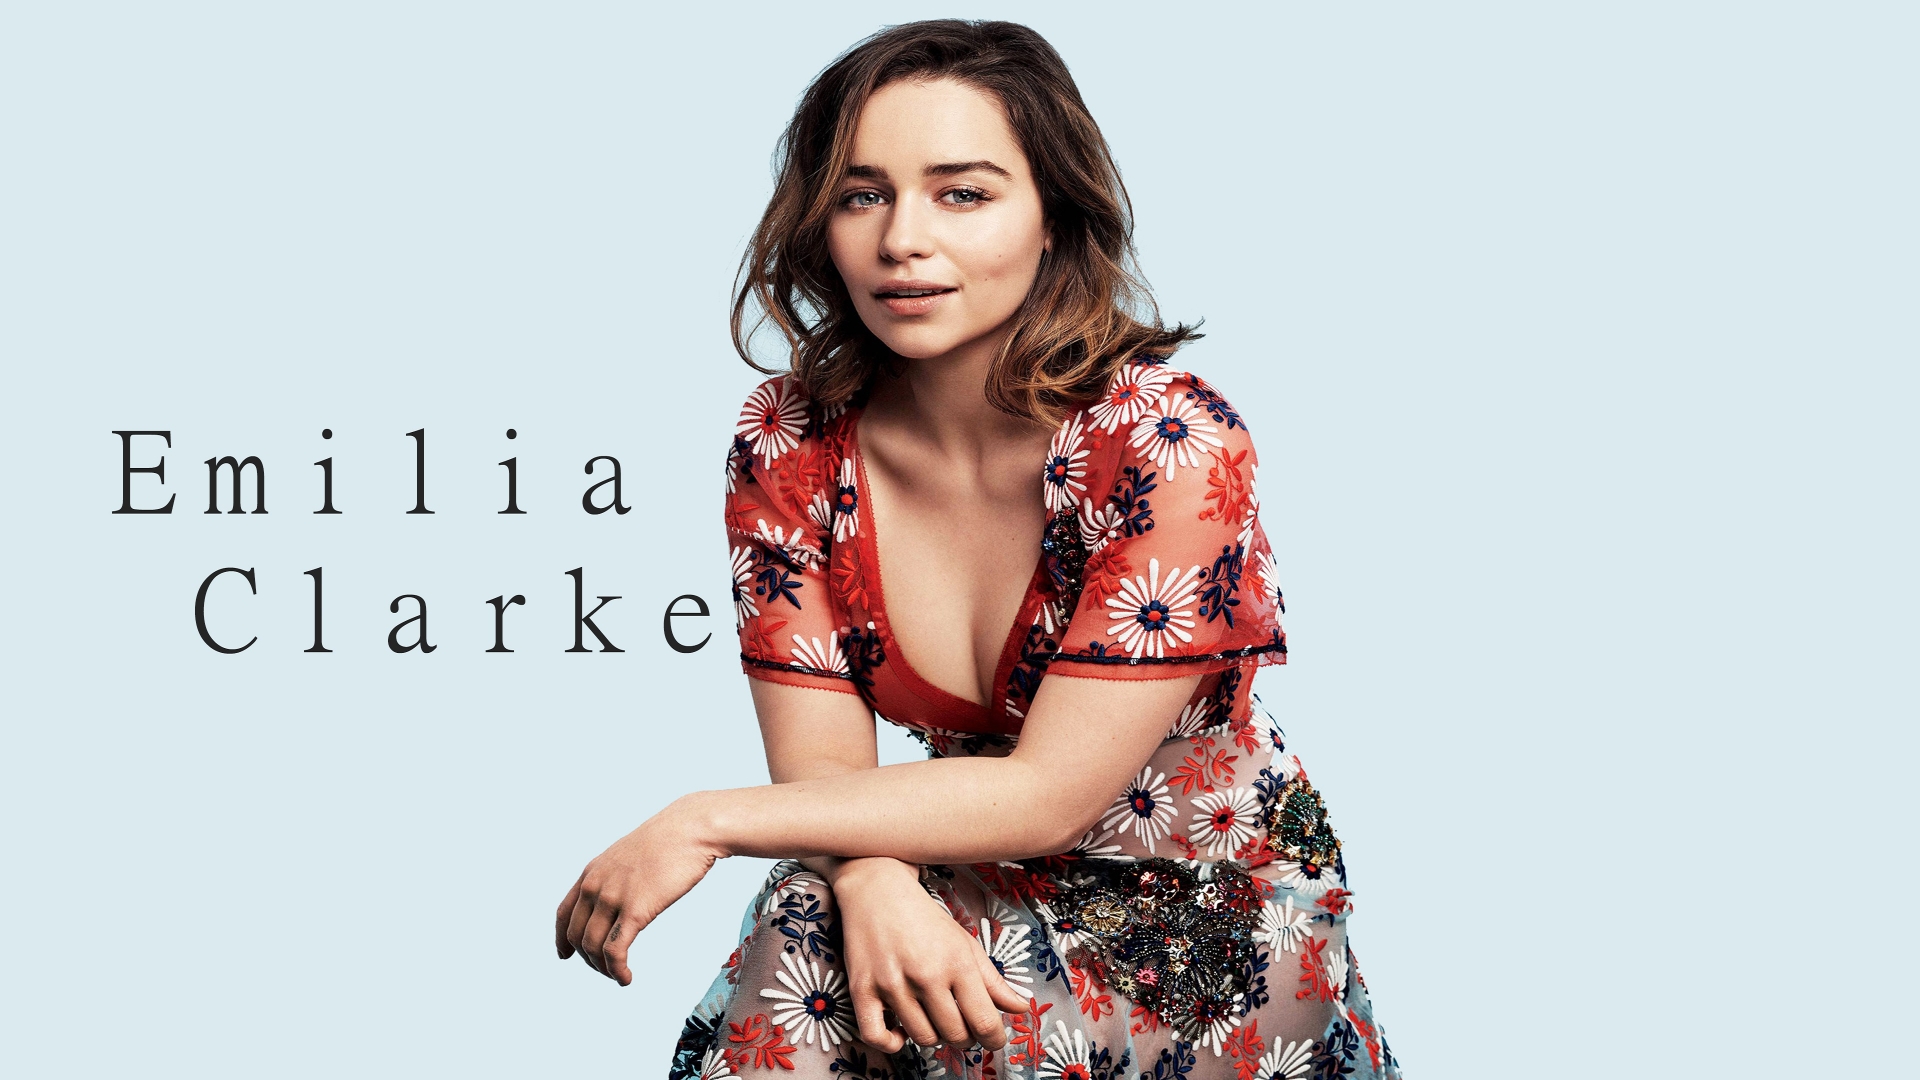 Emilia Clarke 2017 for 1920 x 1080 HDTV 1080p resolution